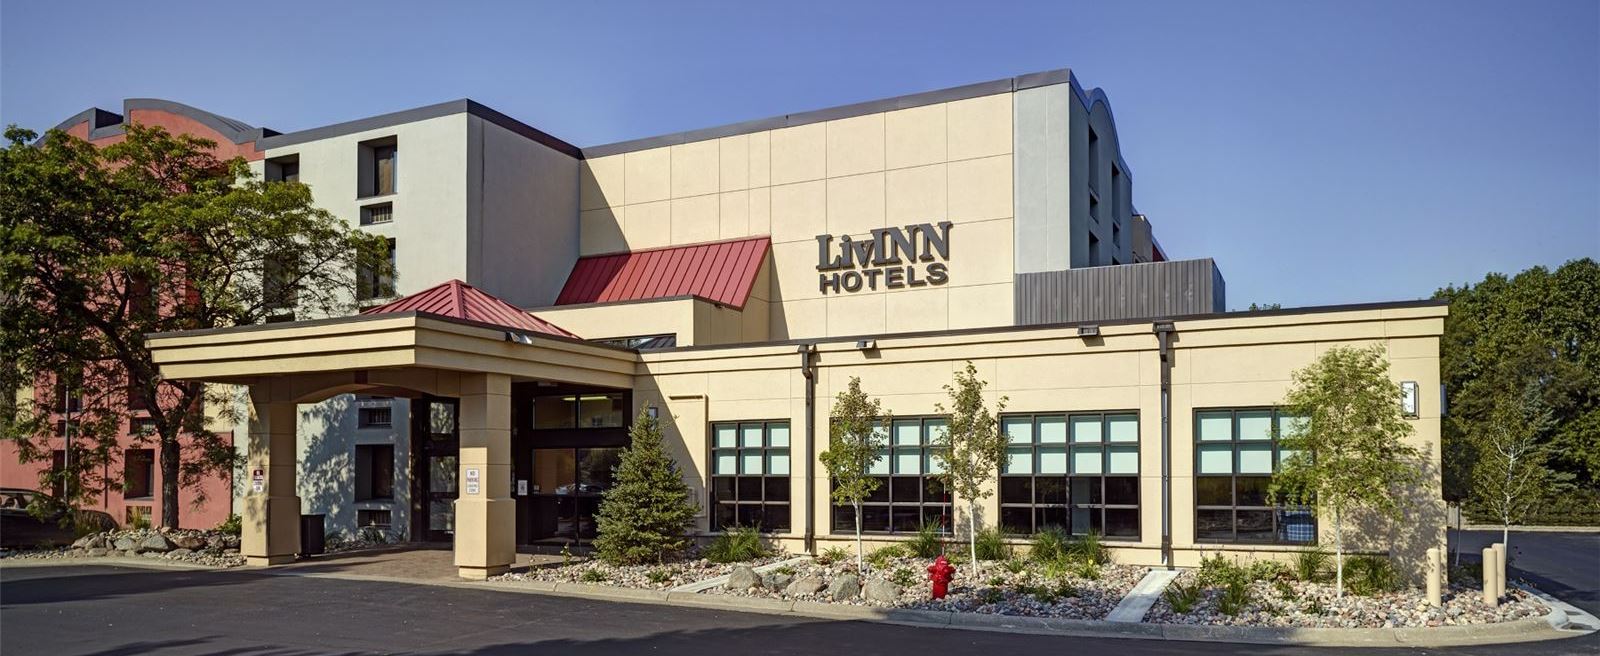 LivINN Hotels, Minneapolis